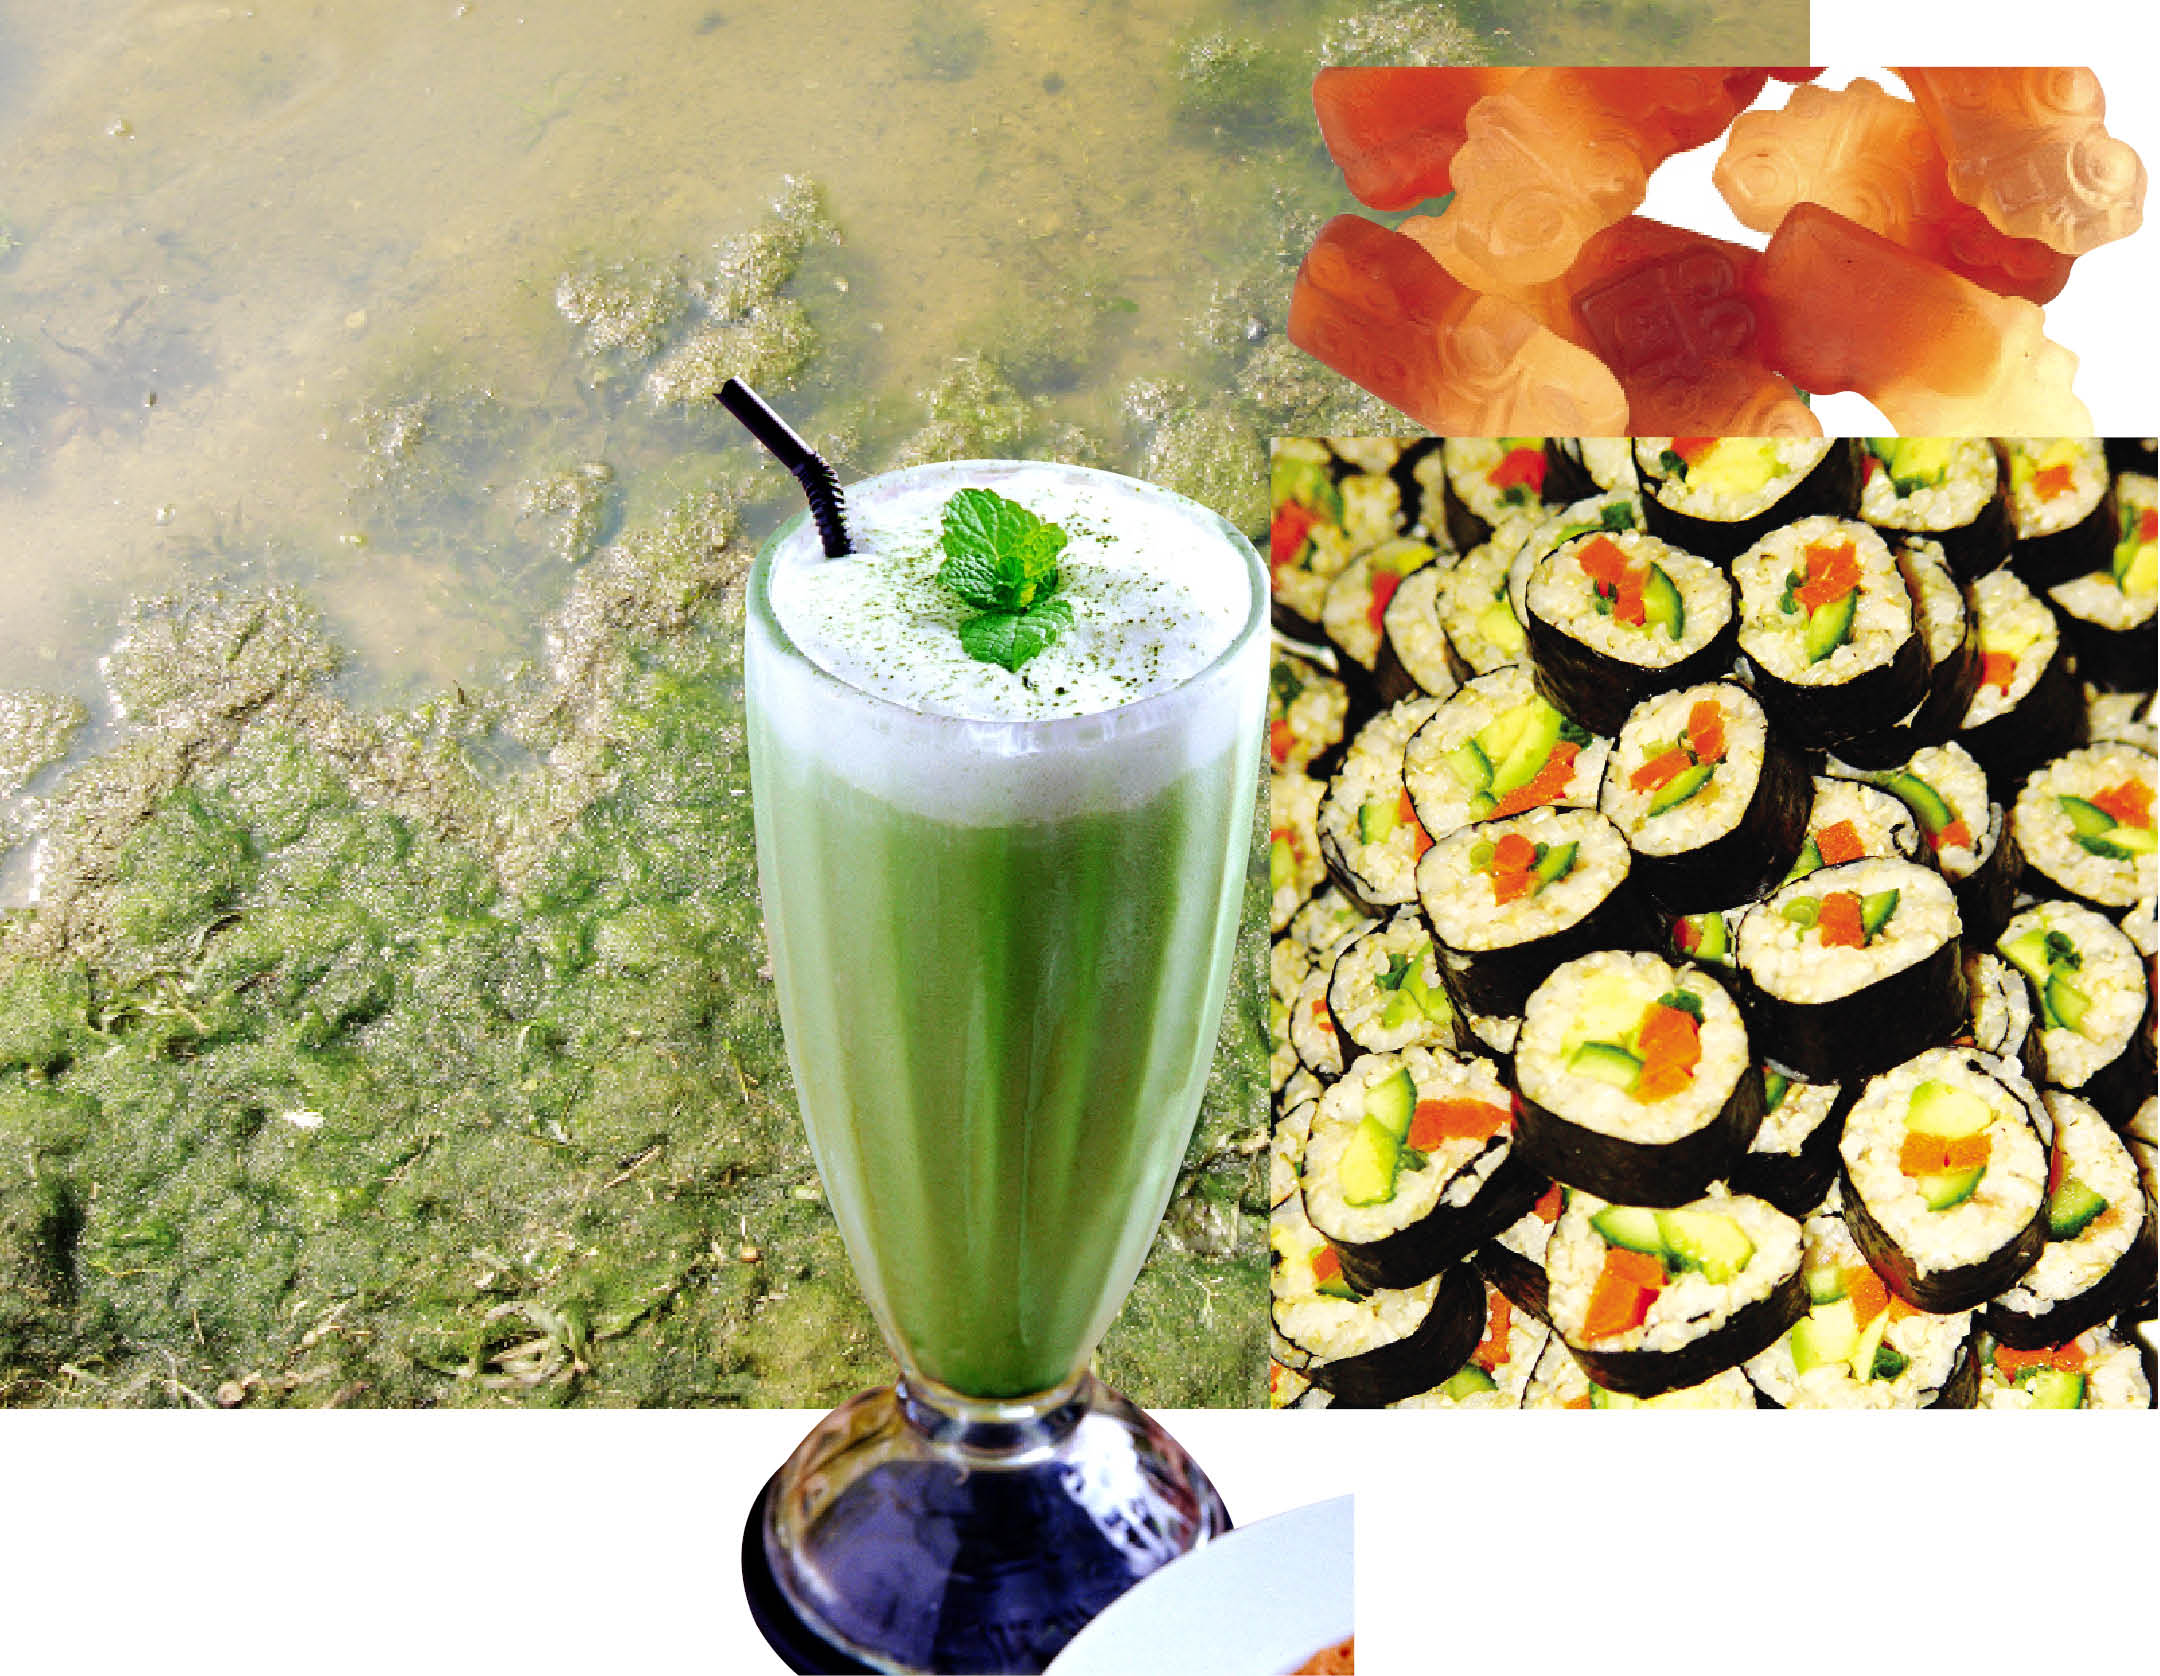 Edible uses of Algae